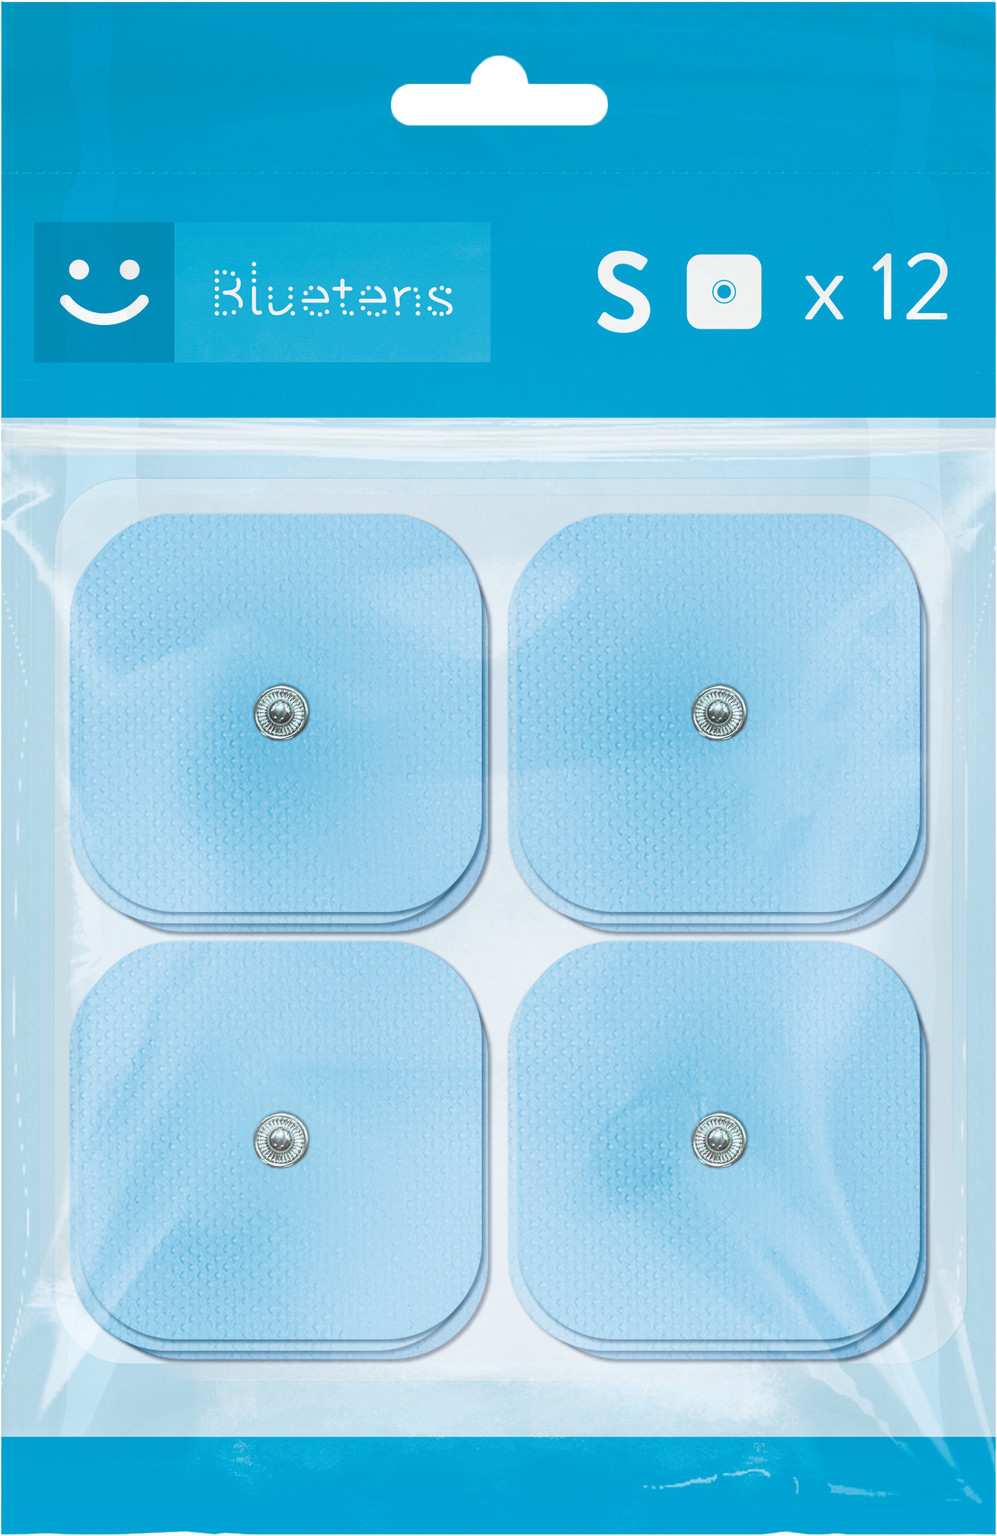 Electrodes bluetens - Tendim